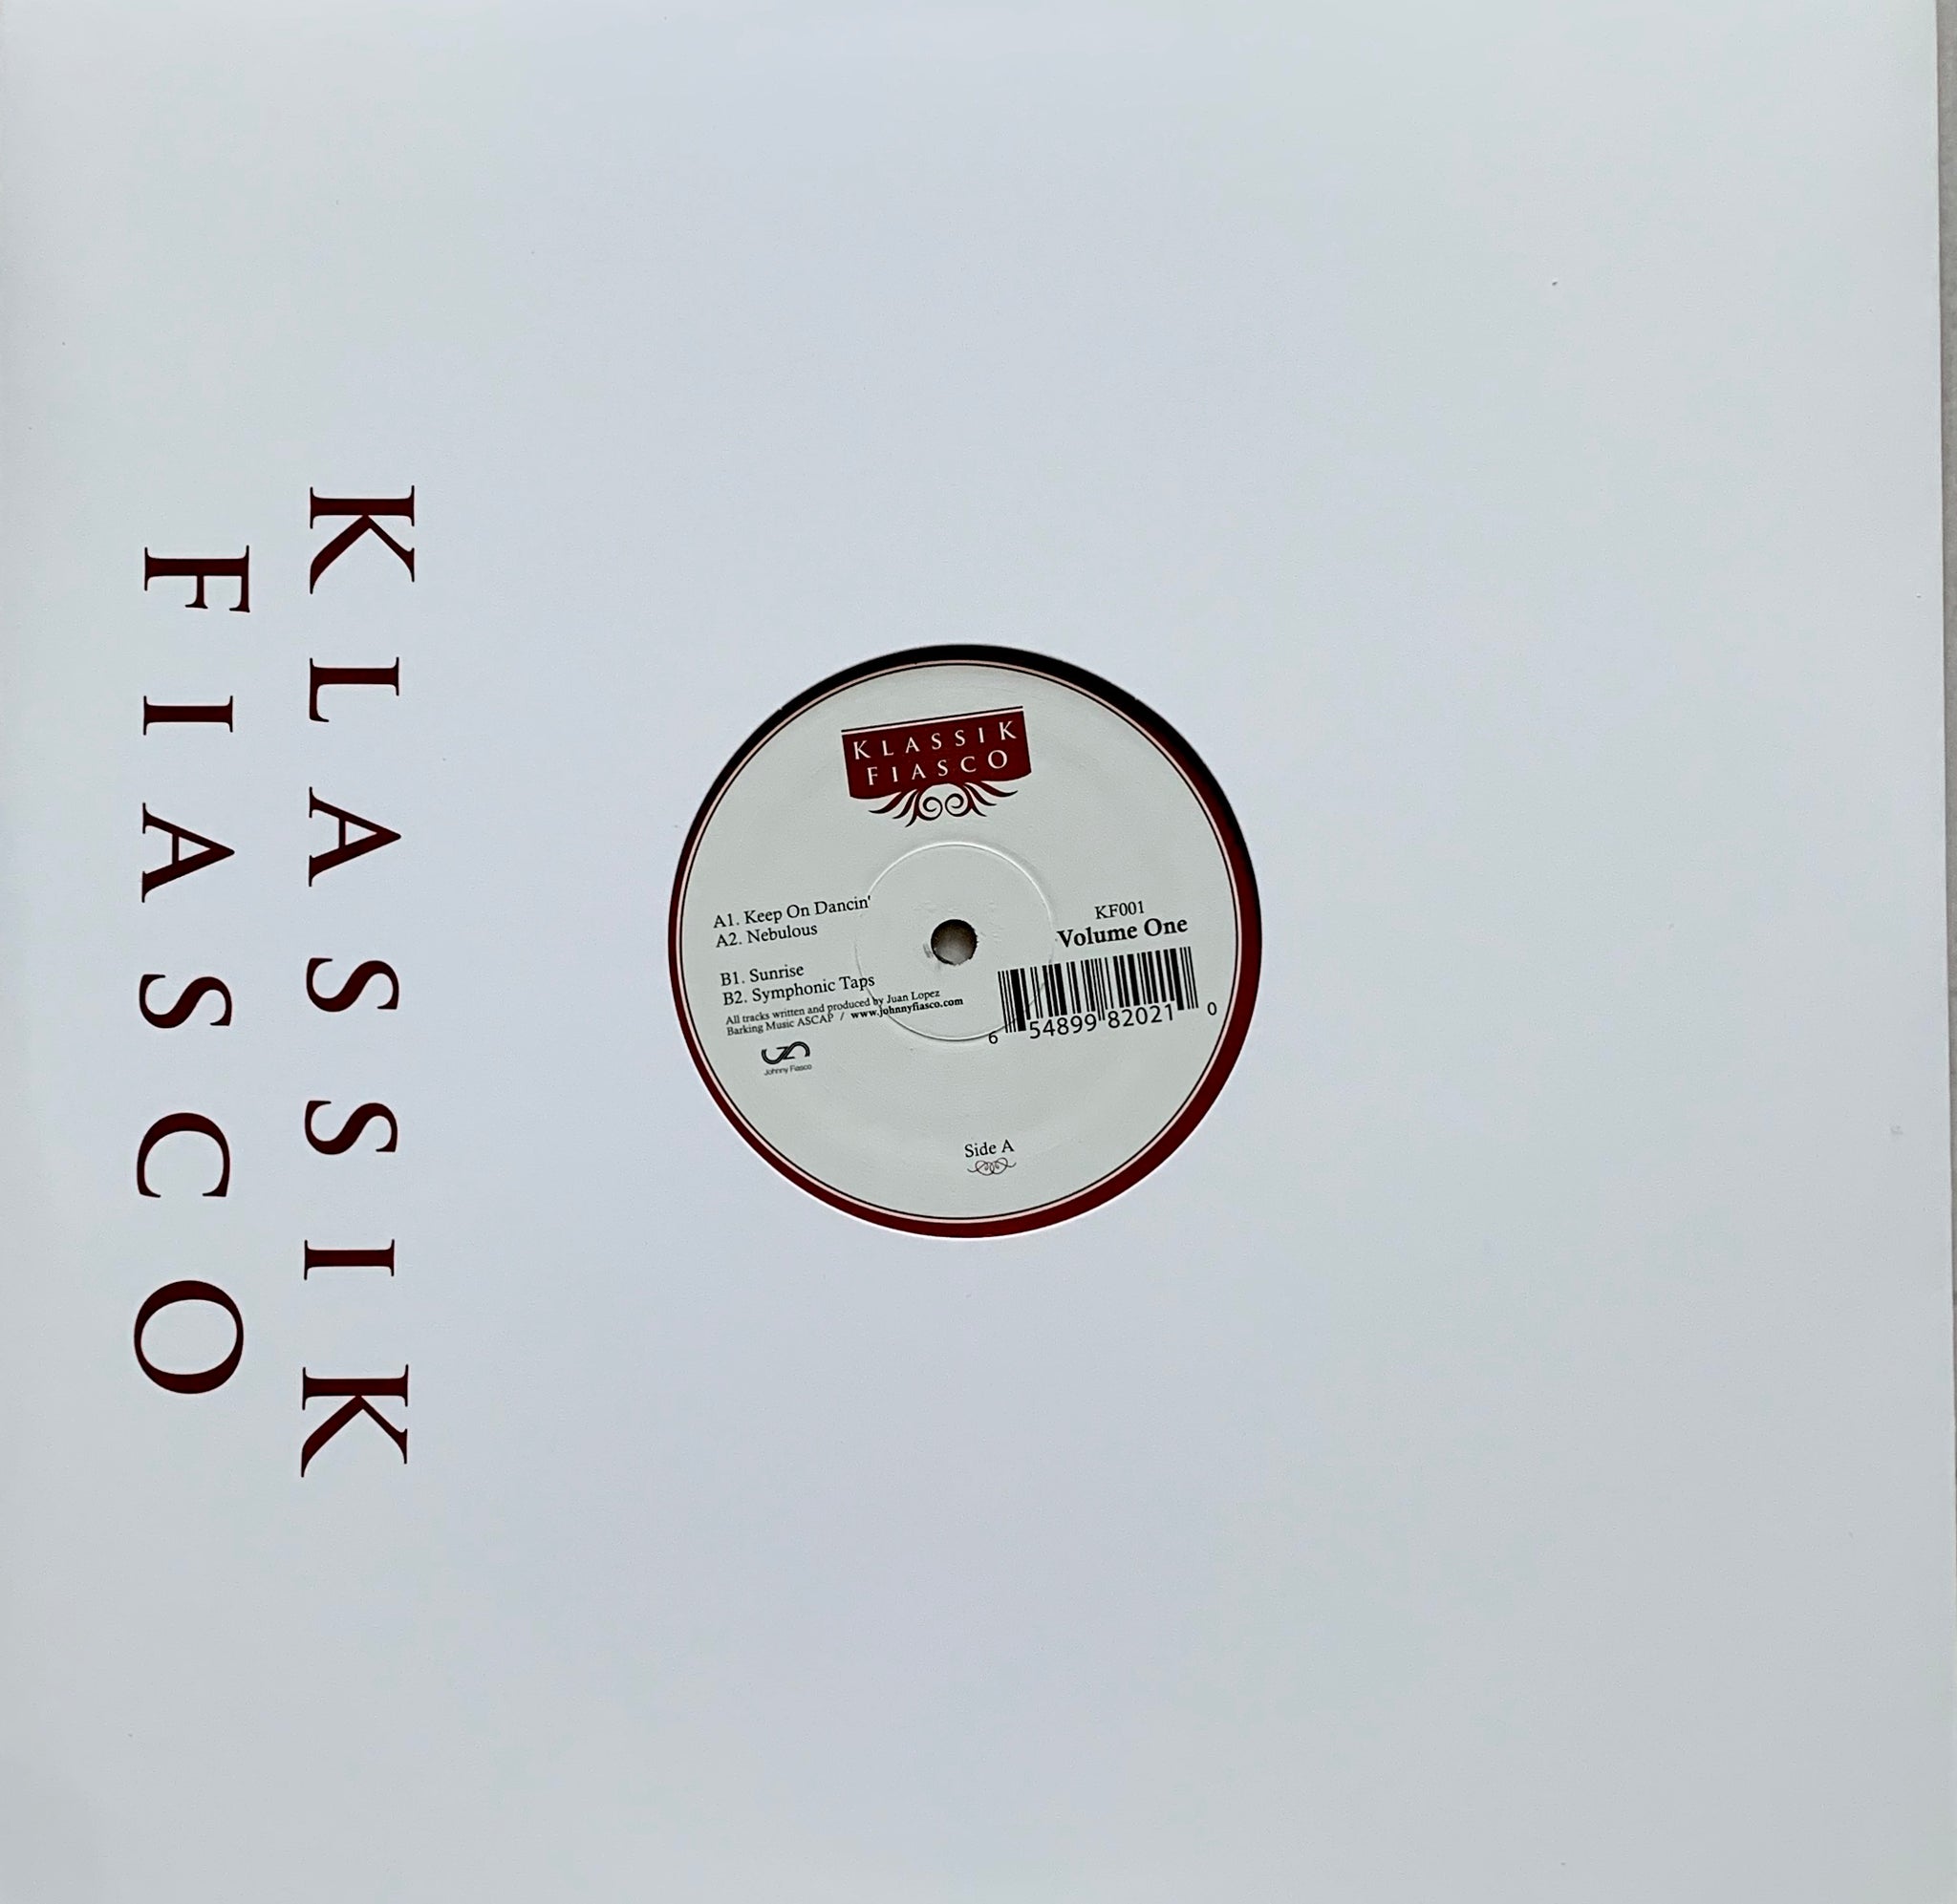 Johnny Fiasco ‎– Klassik Fiasco Volume One